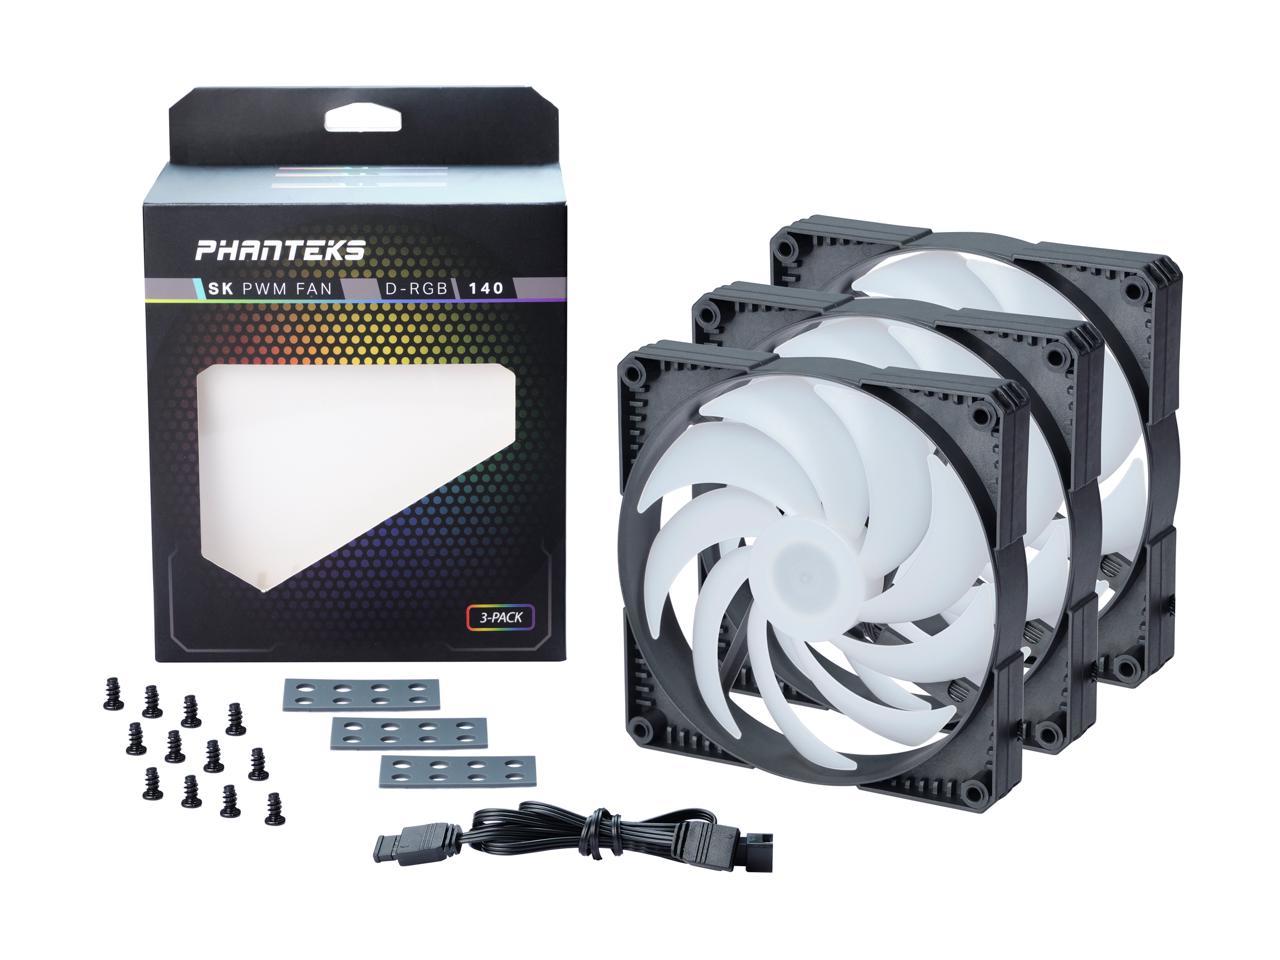 Phanteks Sk140 Drgb Pwm Fan 3 Pack - 3X 140Mm Fan, High Airflow Nine-Blade Design, Drgb Lighting, Rubber Dampening Washers - Black